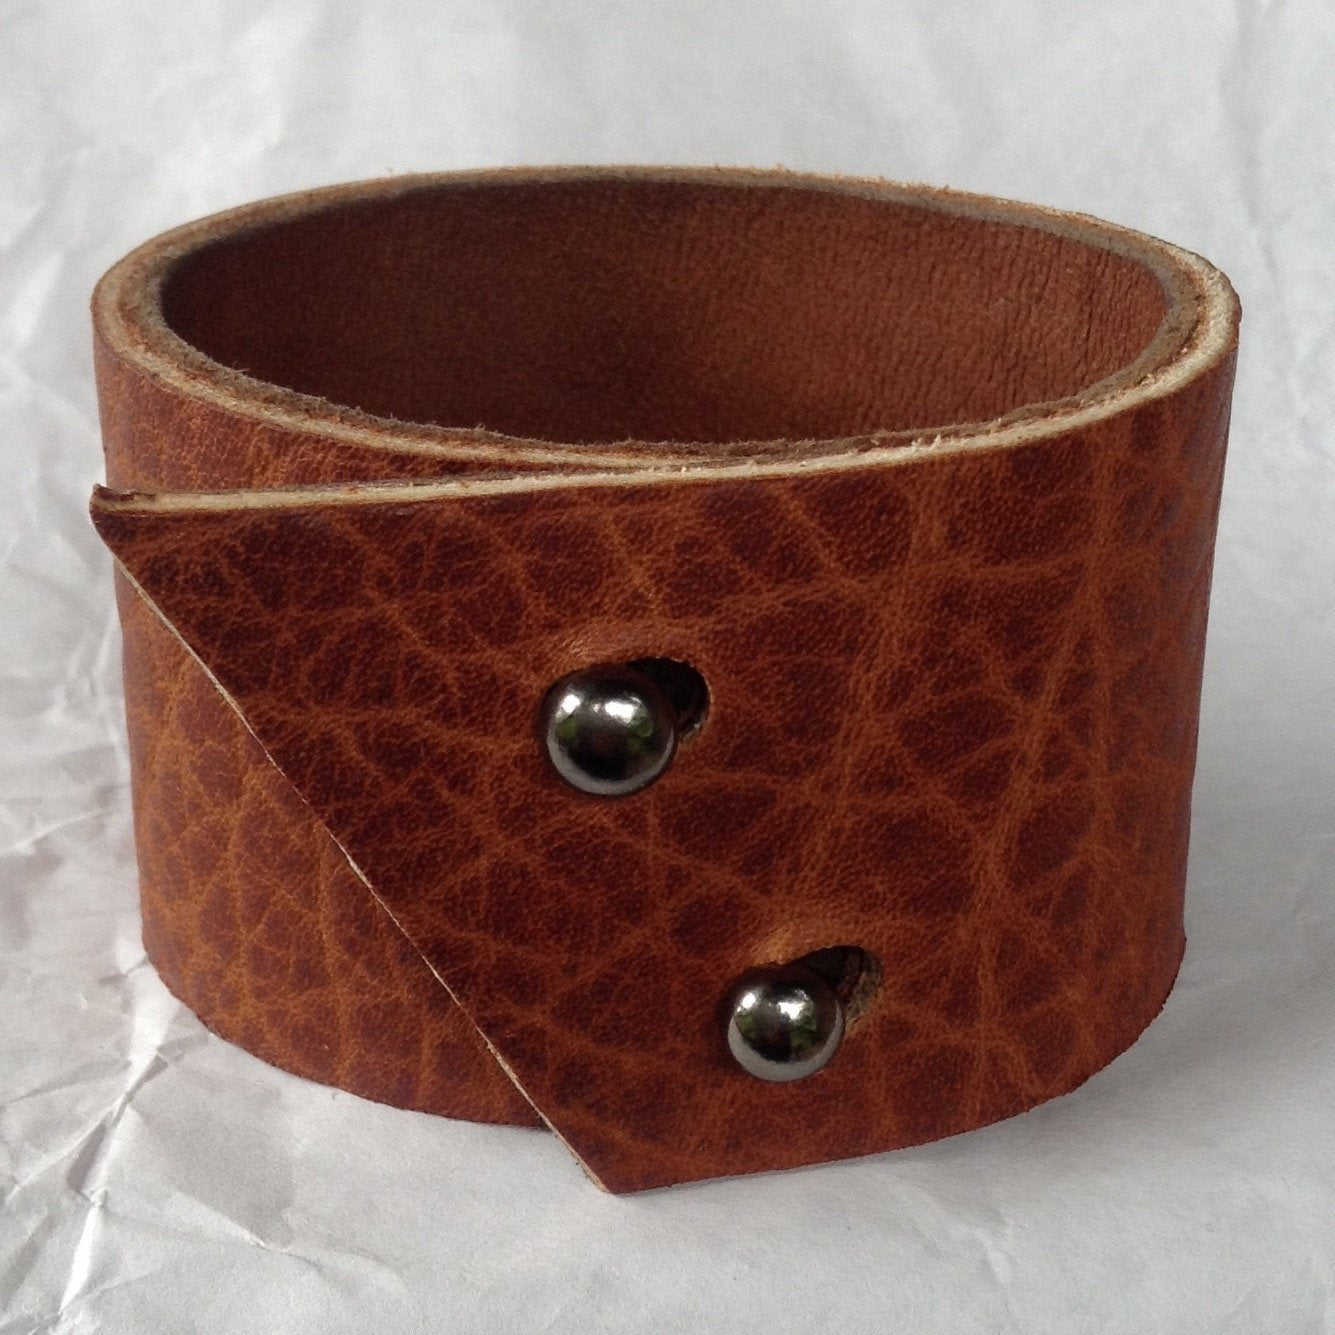 Kidskin lined deep textured leather bracelet. Wide cuff.